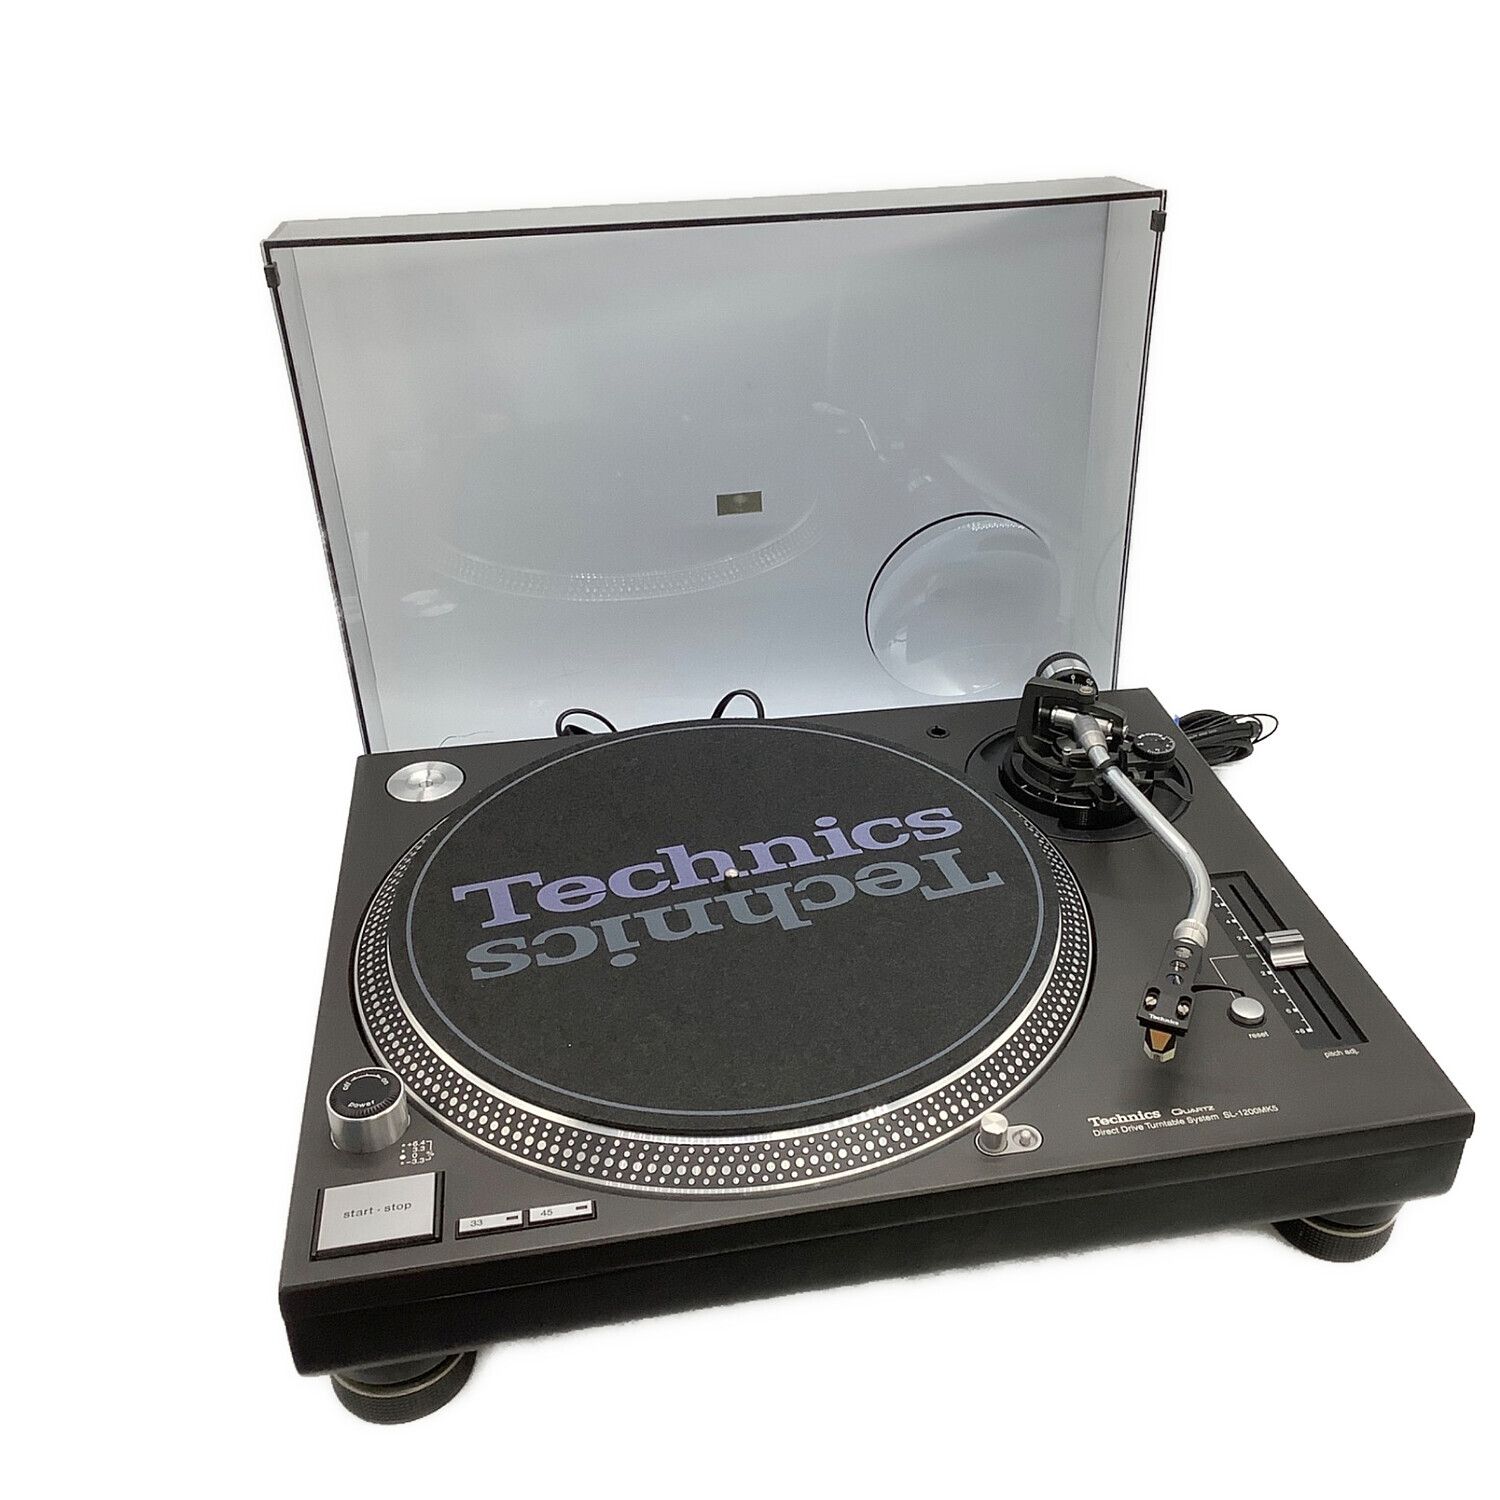 Technics SL-1200 MK5 テクニクス ターンテーブル - DJ機器